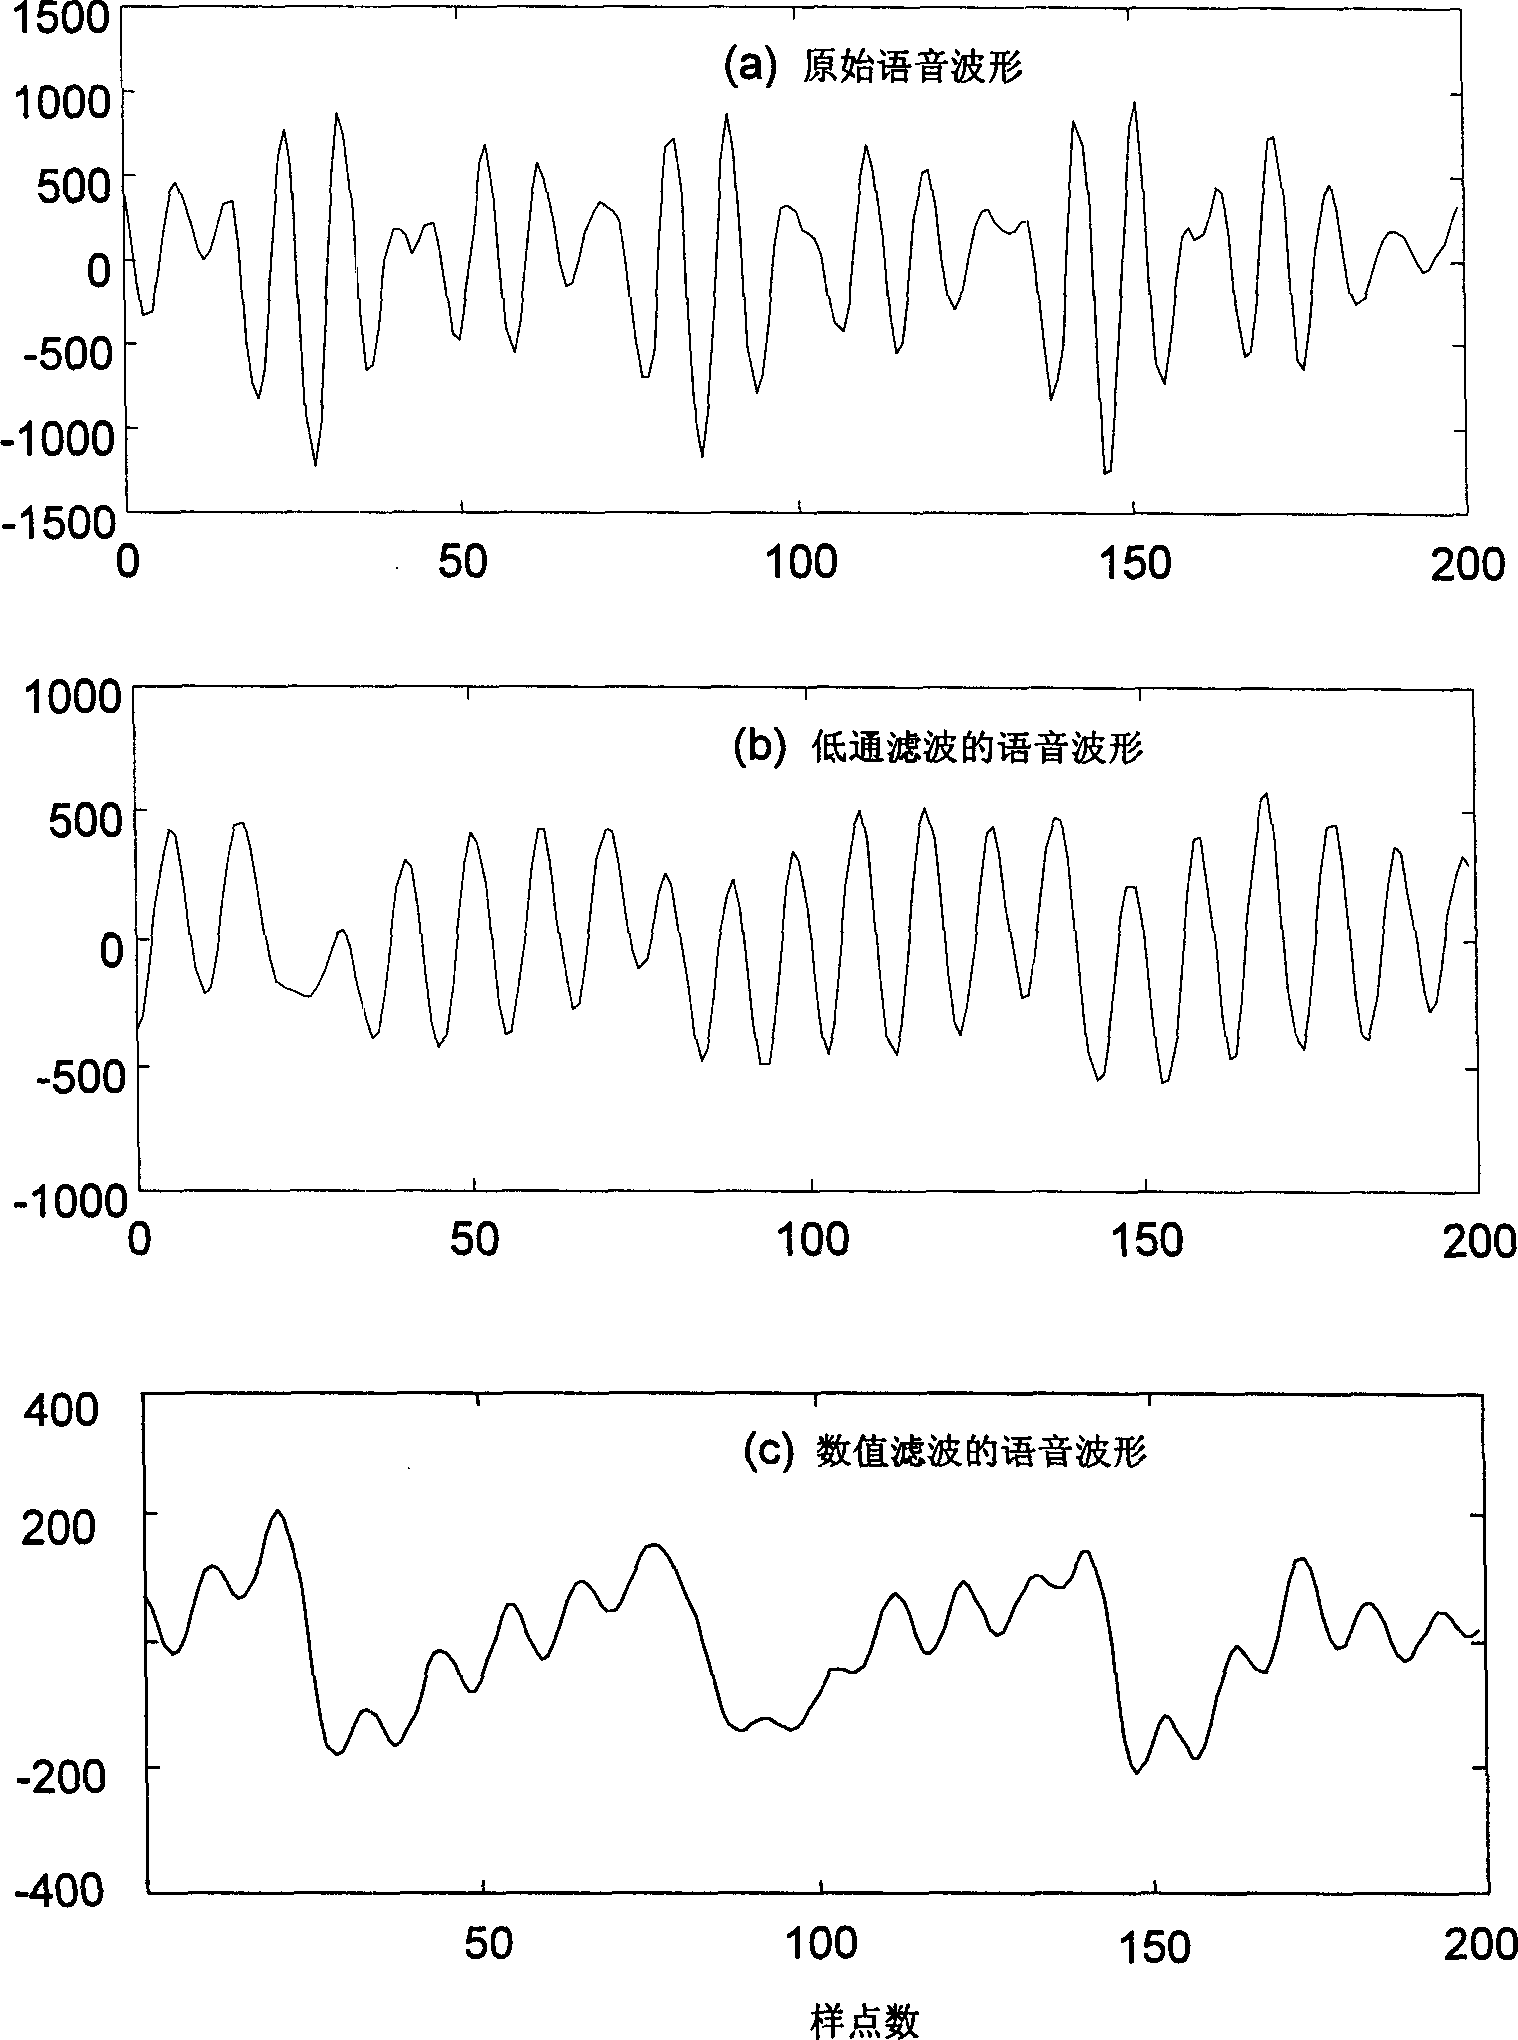 Speech signal base voice period detection method based on wave form correlation method